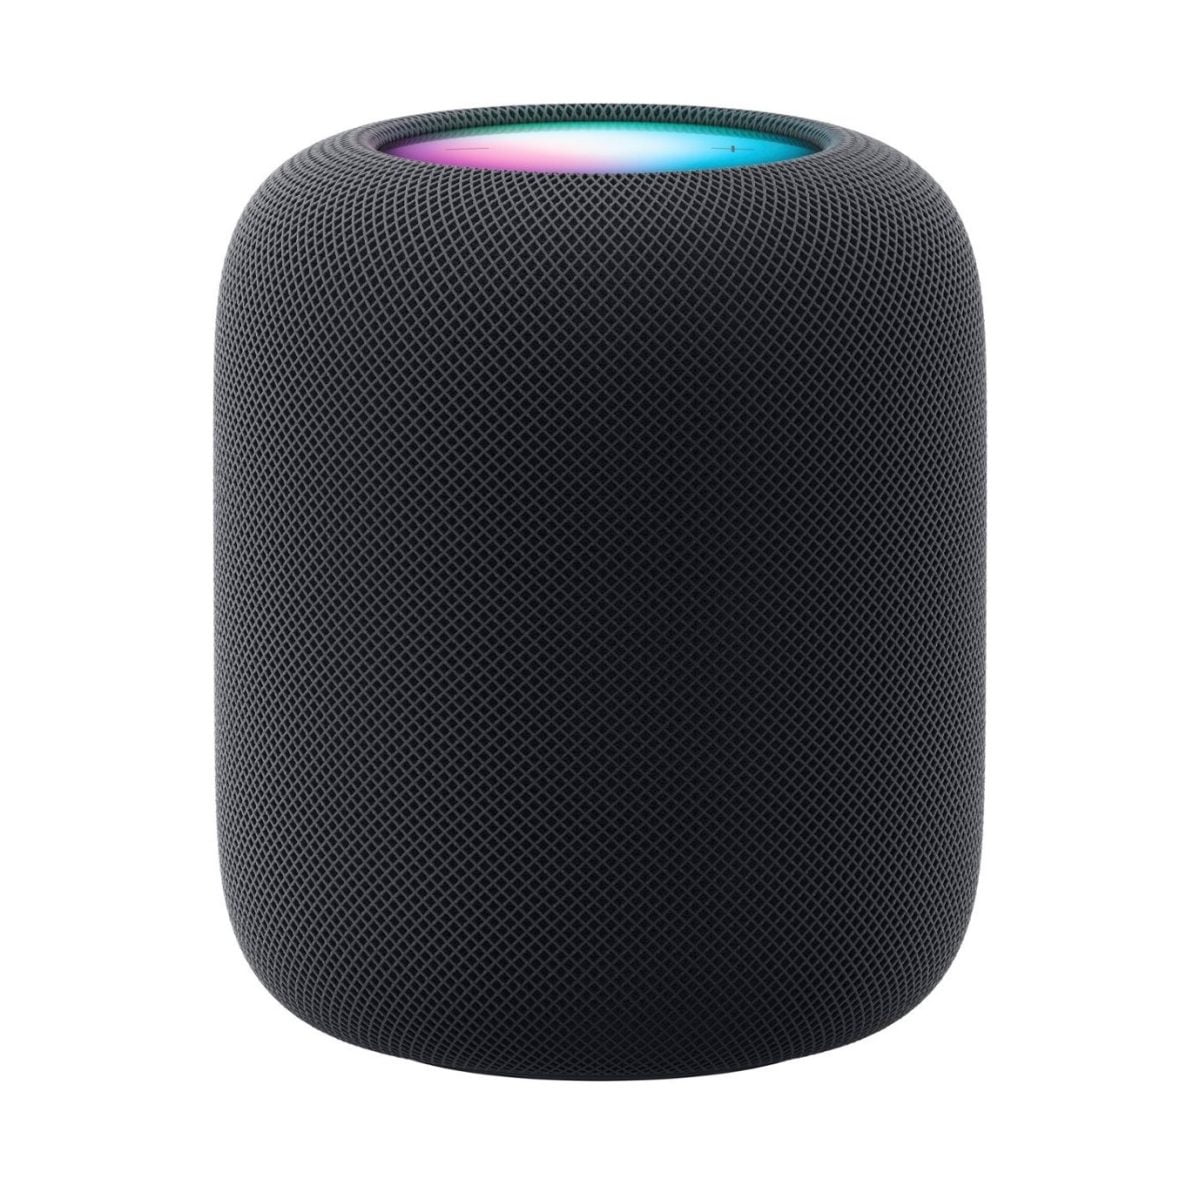 Apple Homepod (2Nd Generation) Smart Speaker With Siri